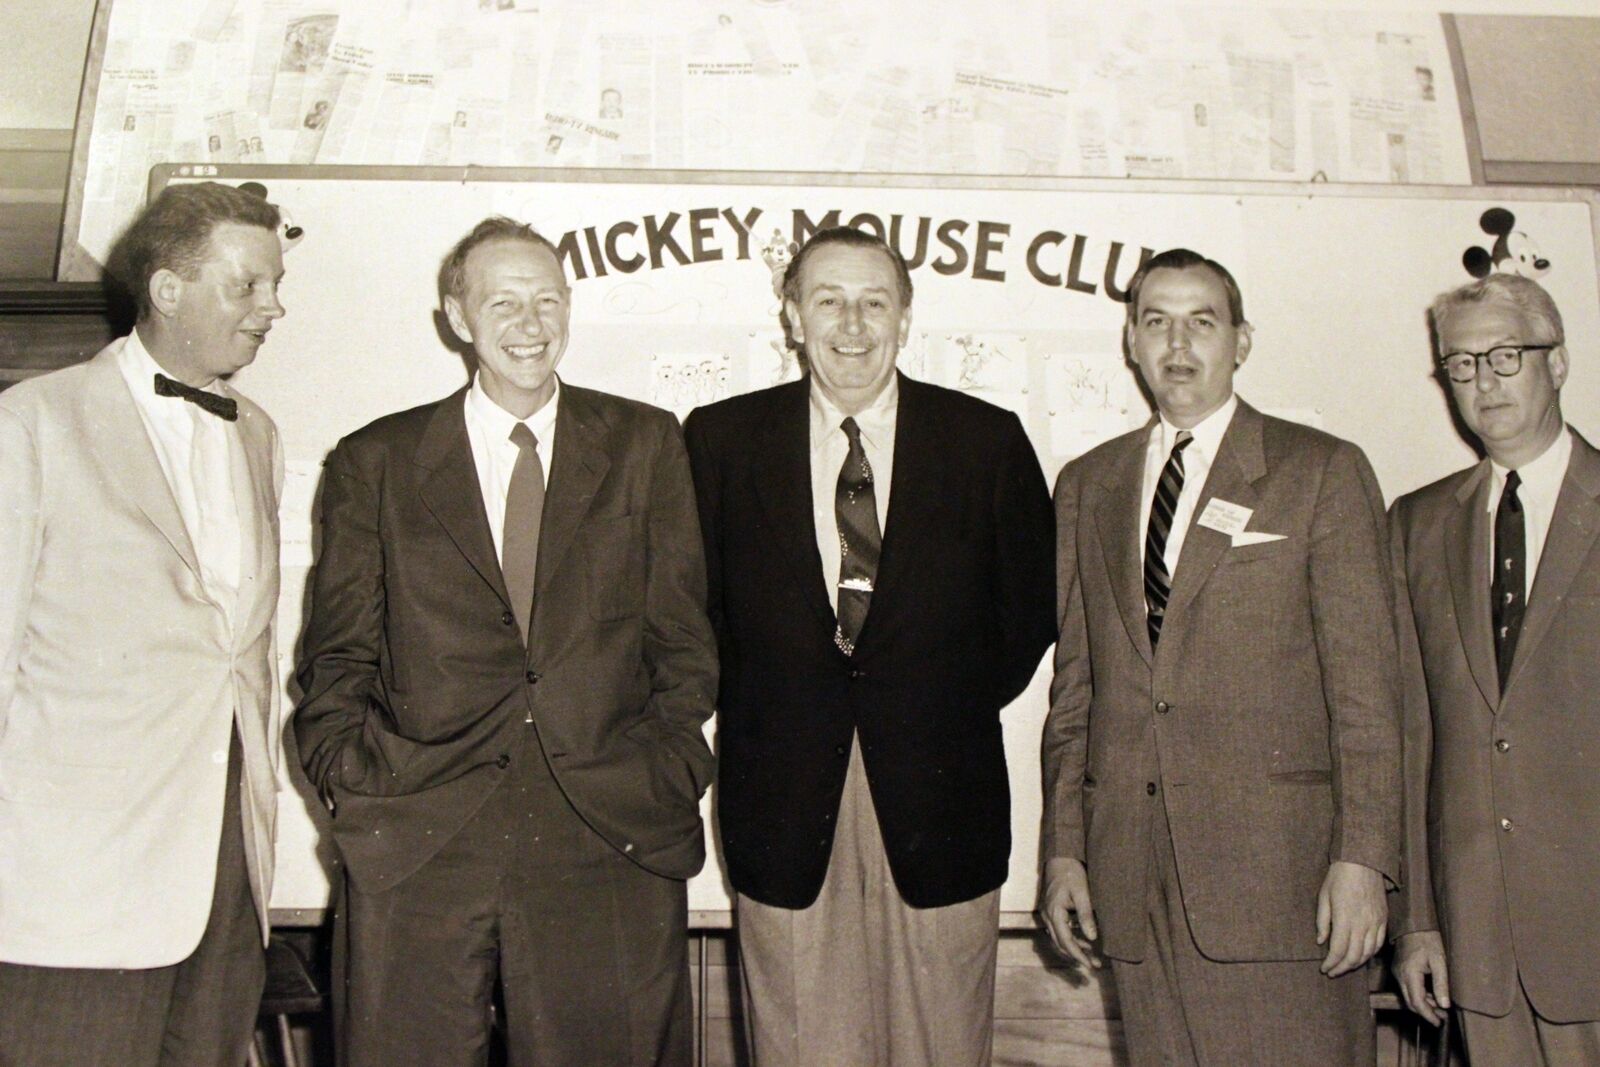 Walt Disney 1955 Penthouse Club Studio Photo Mickey Mouse Club TV Sponsor Execs